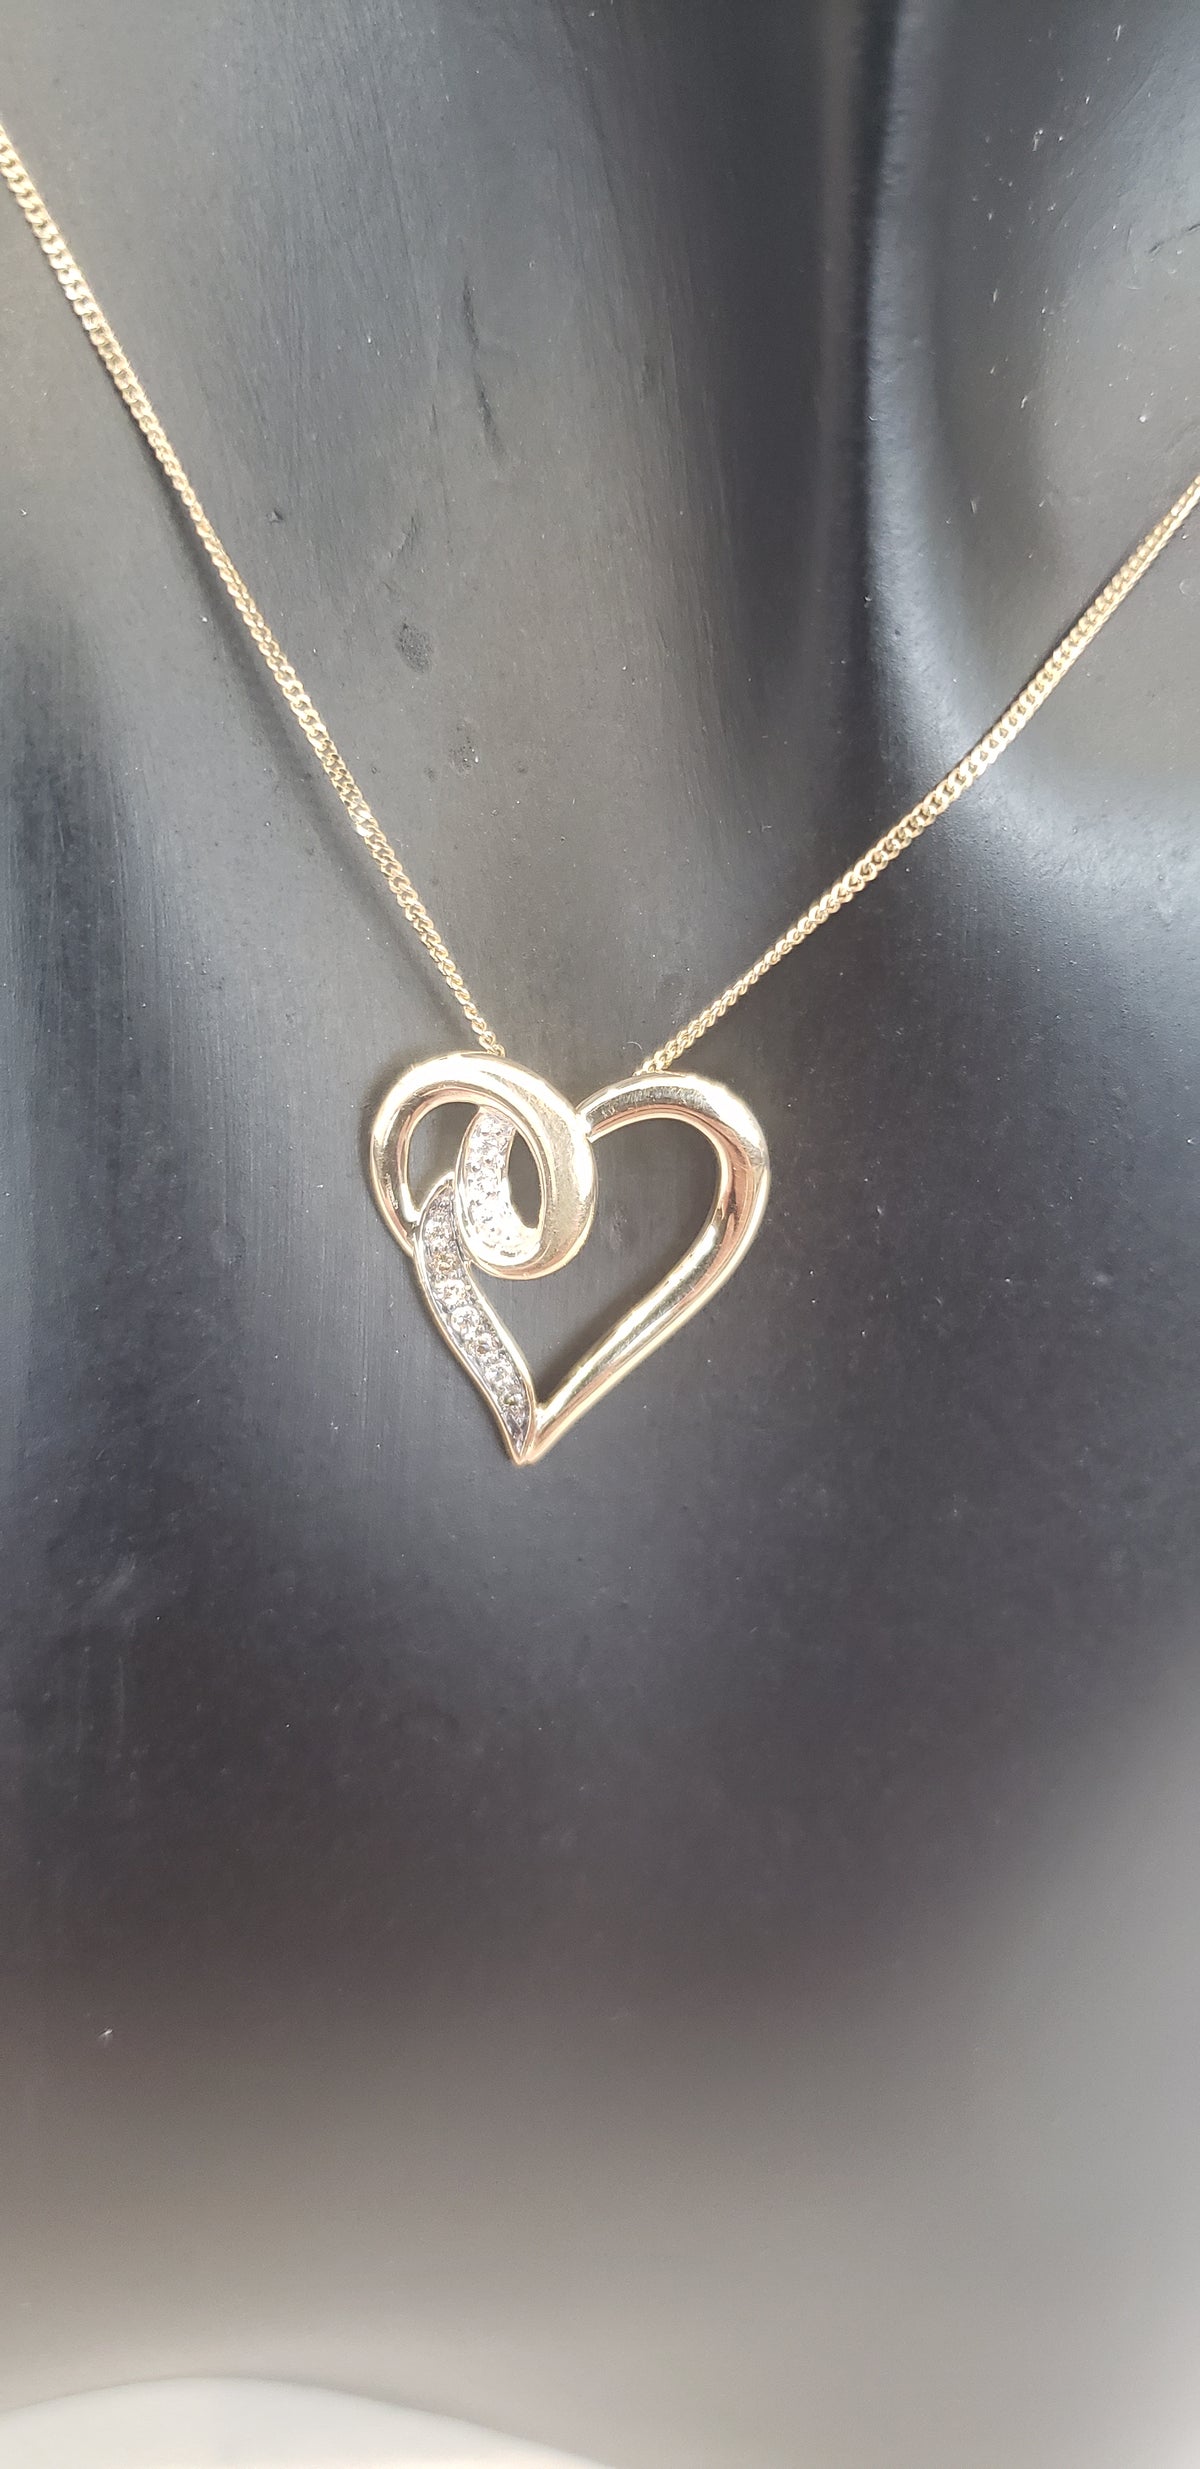 10K Yellow Gold 0.035 cttw Brown Diamond Heart Pendant, 18&quot;